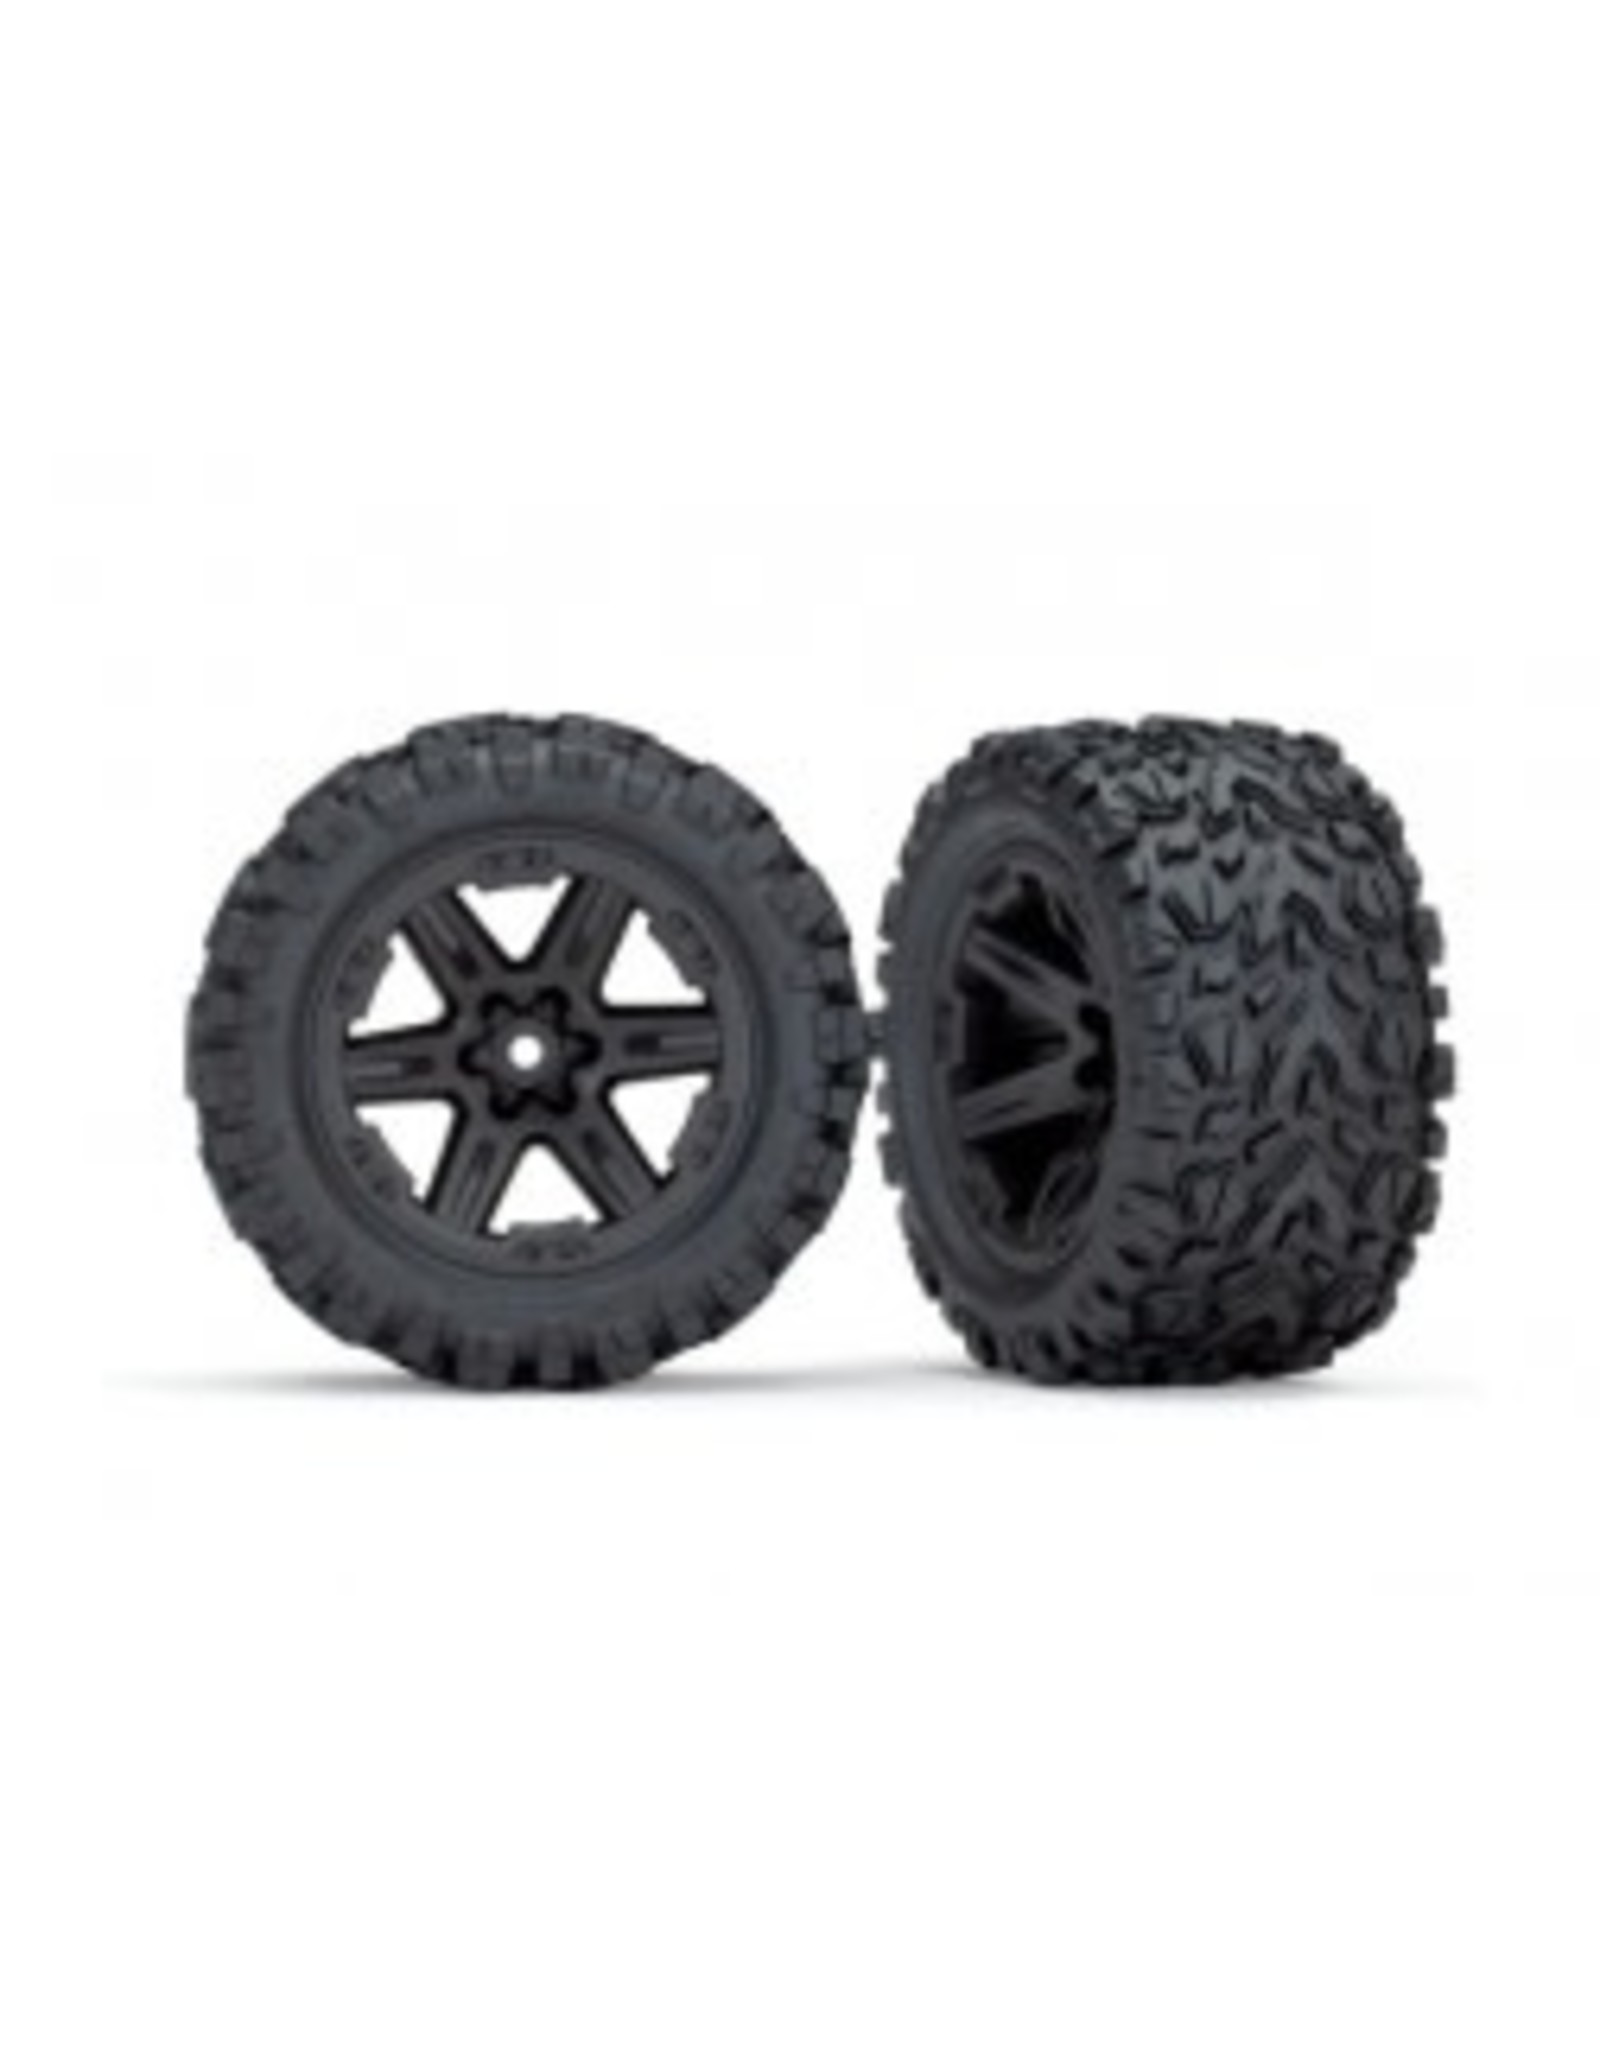 Traxxas Tires & wheels, assembled, glued (2.8") (RXT black wheels, Talon Extreme tires, foam inserts) (2WD electric rear) (2) (TSM rated)